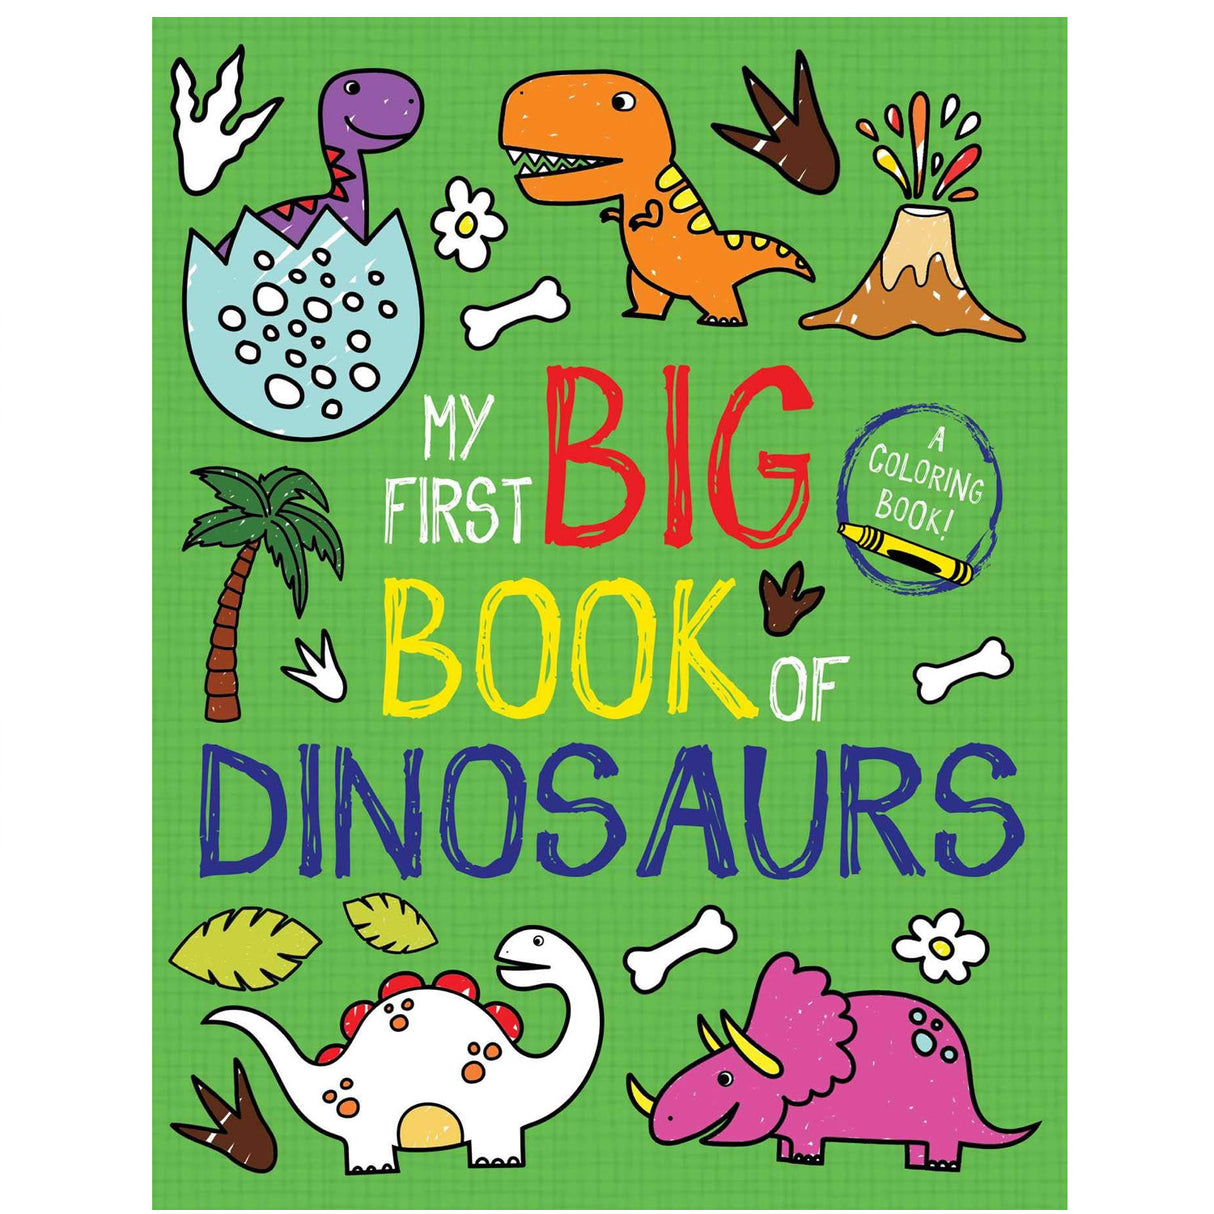 Big Book of Dinosaurs Coloring Book